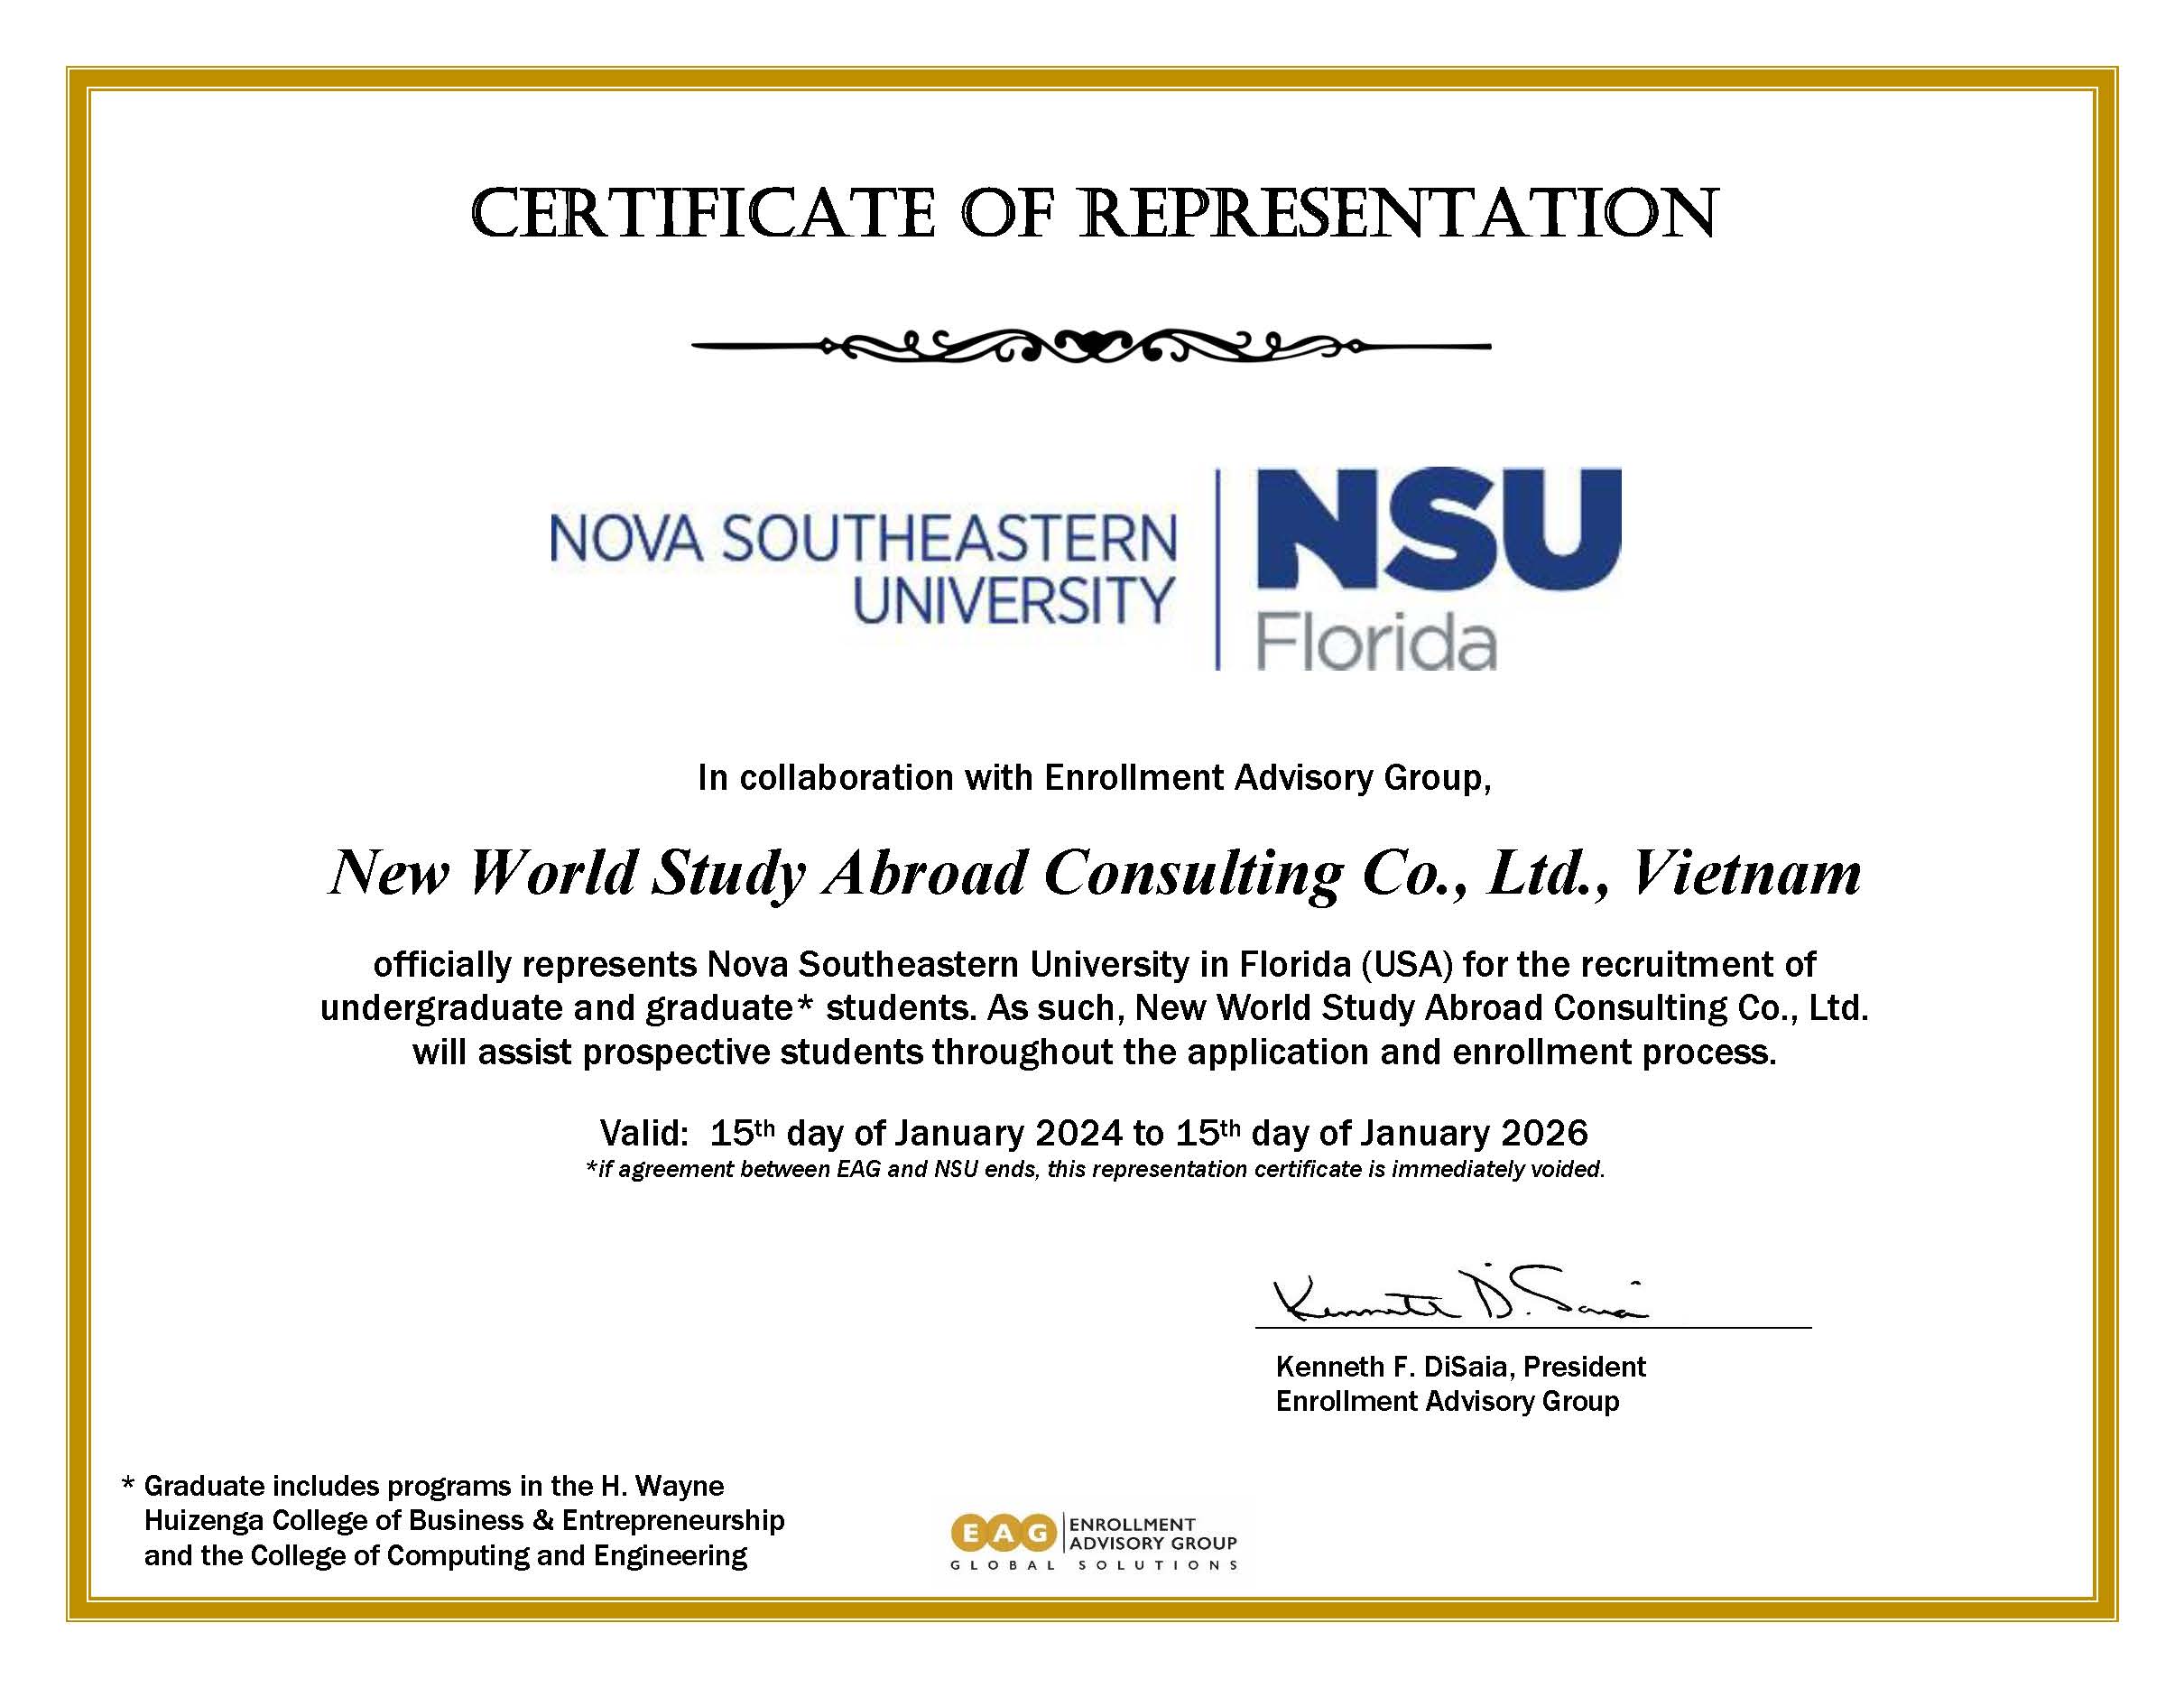 Nova Southeastern University - Fort Lauderdale, Florida